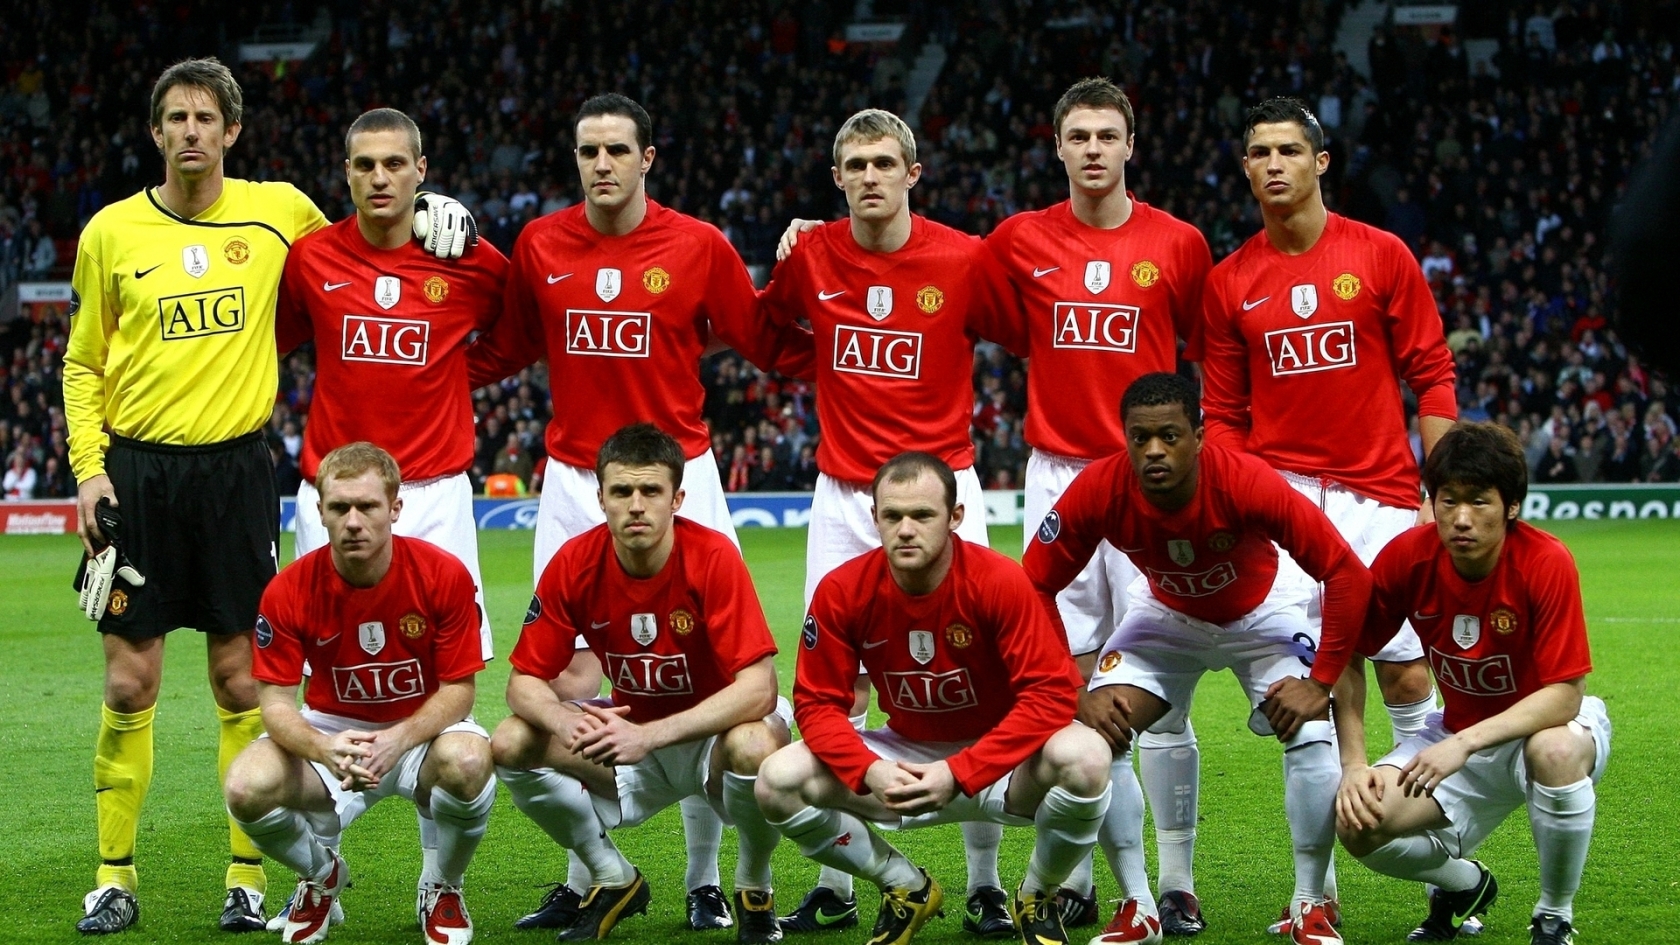 Manchester United Team for 1680 x 945 HDTV resolution